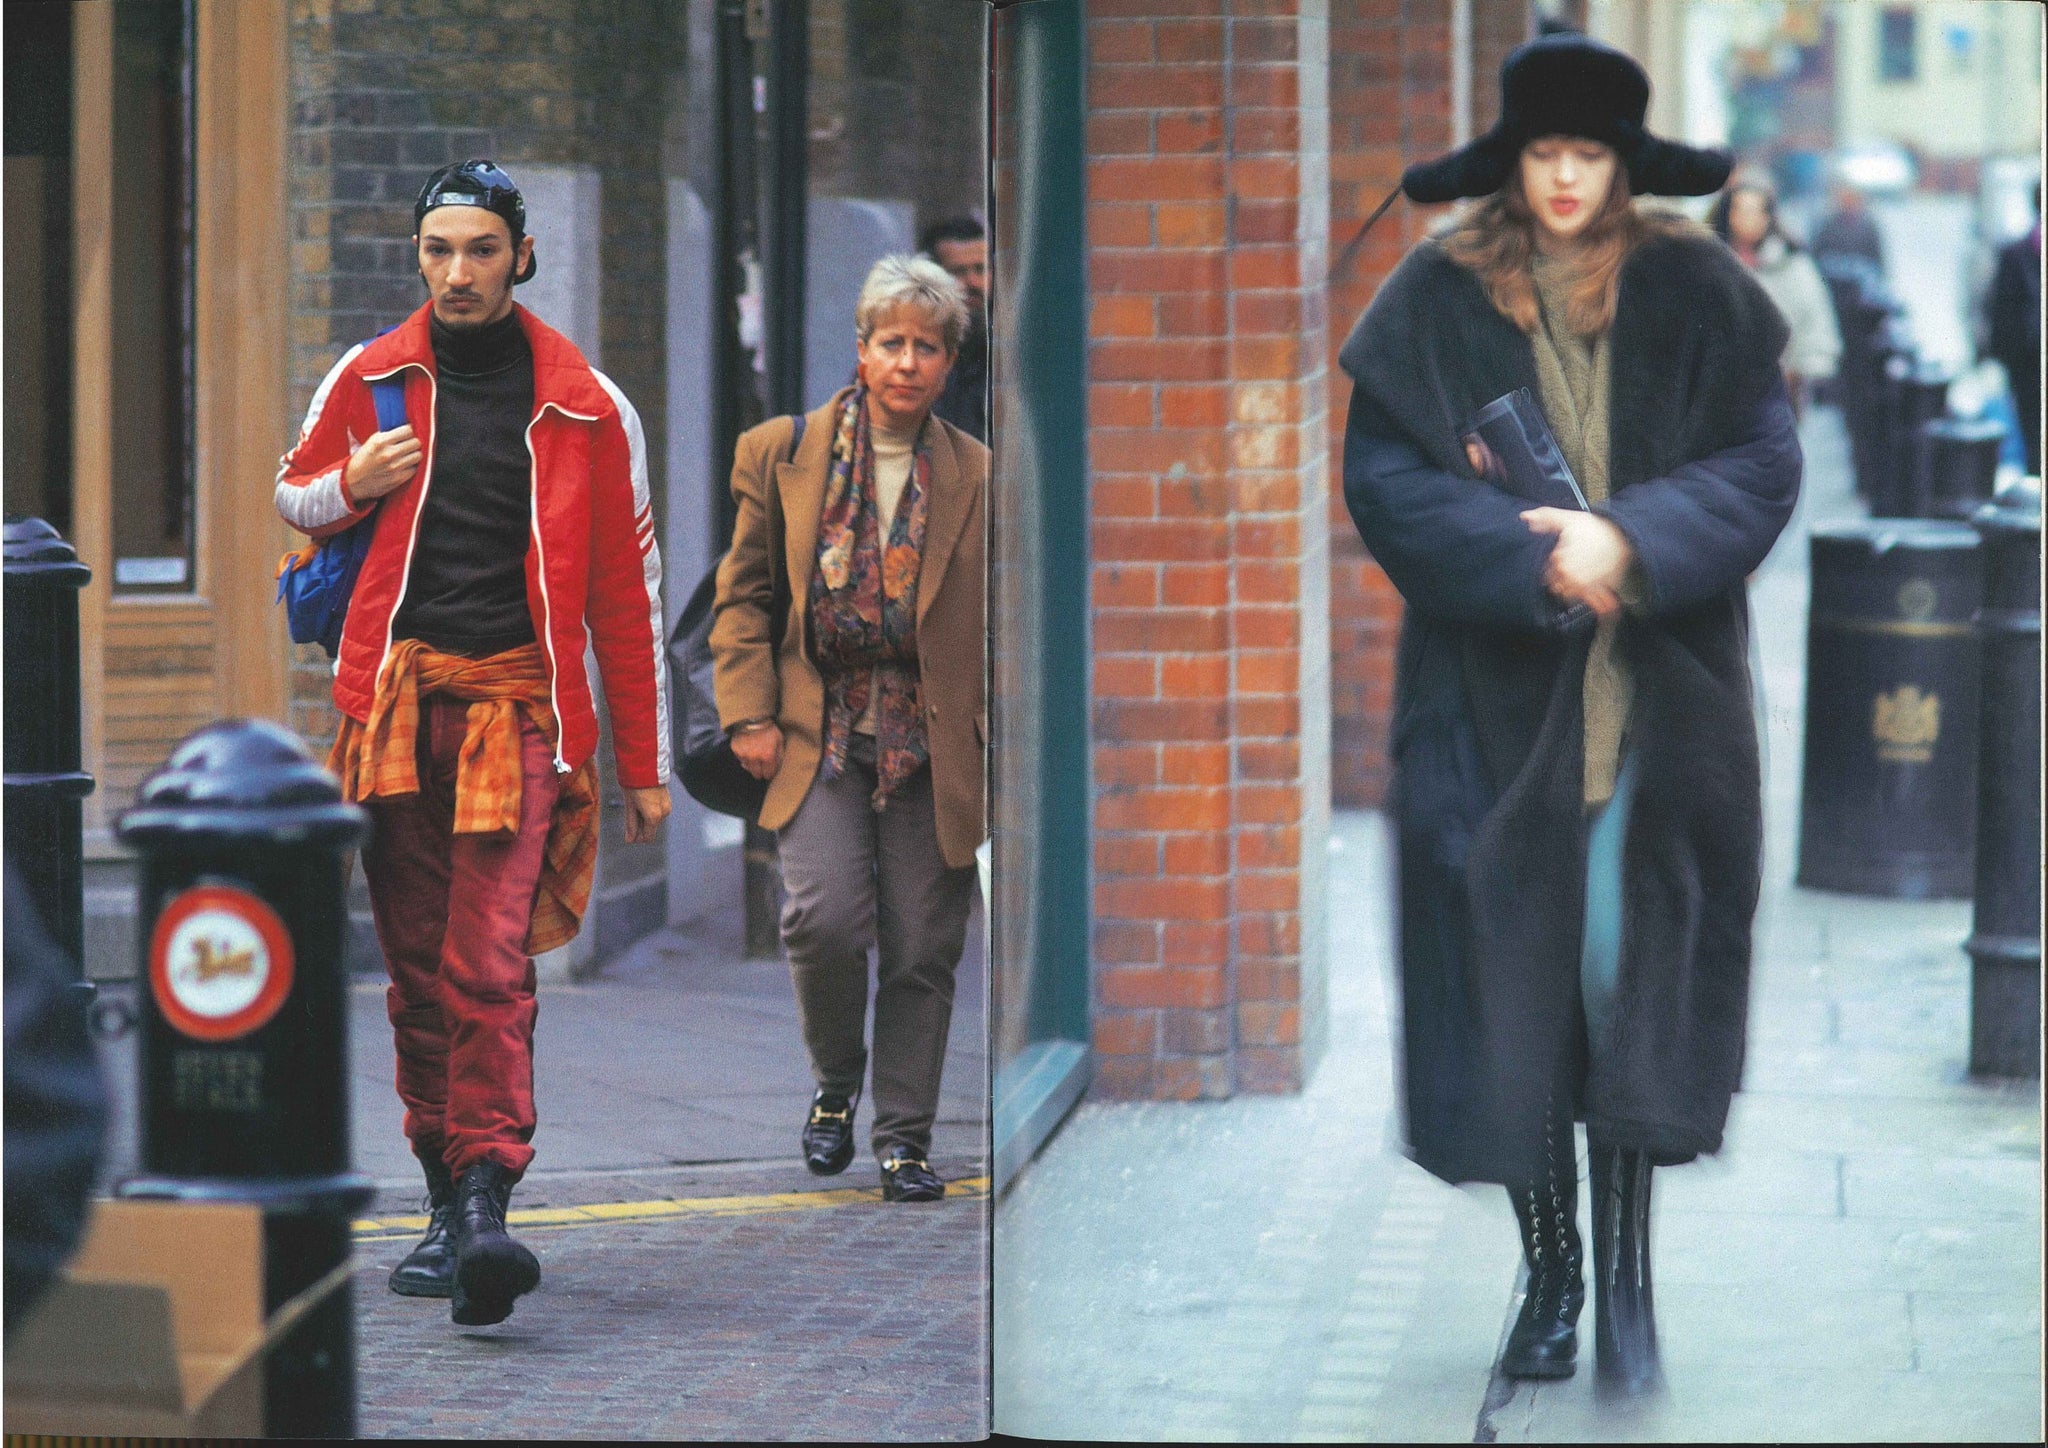 STREET magazine no. 58 / may 1994 / street fashion in london / Shoichi Aoki